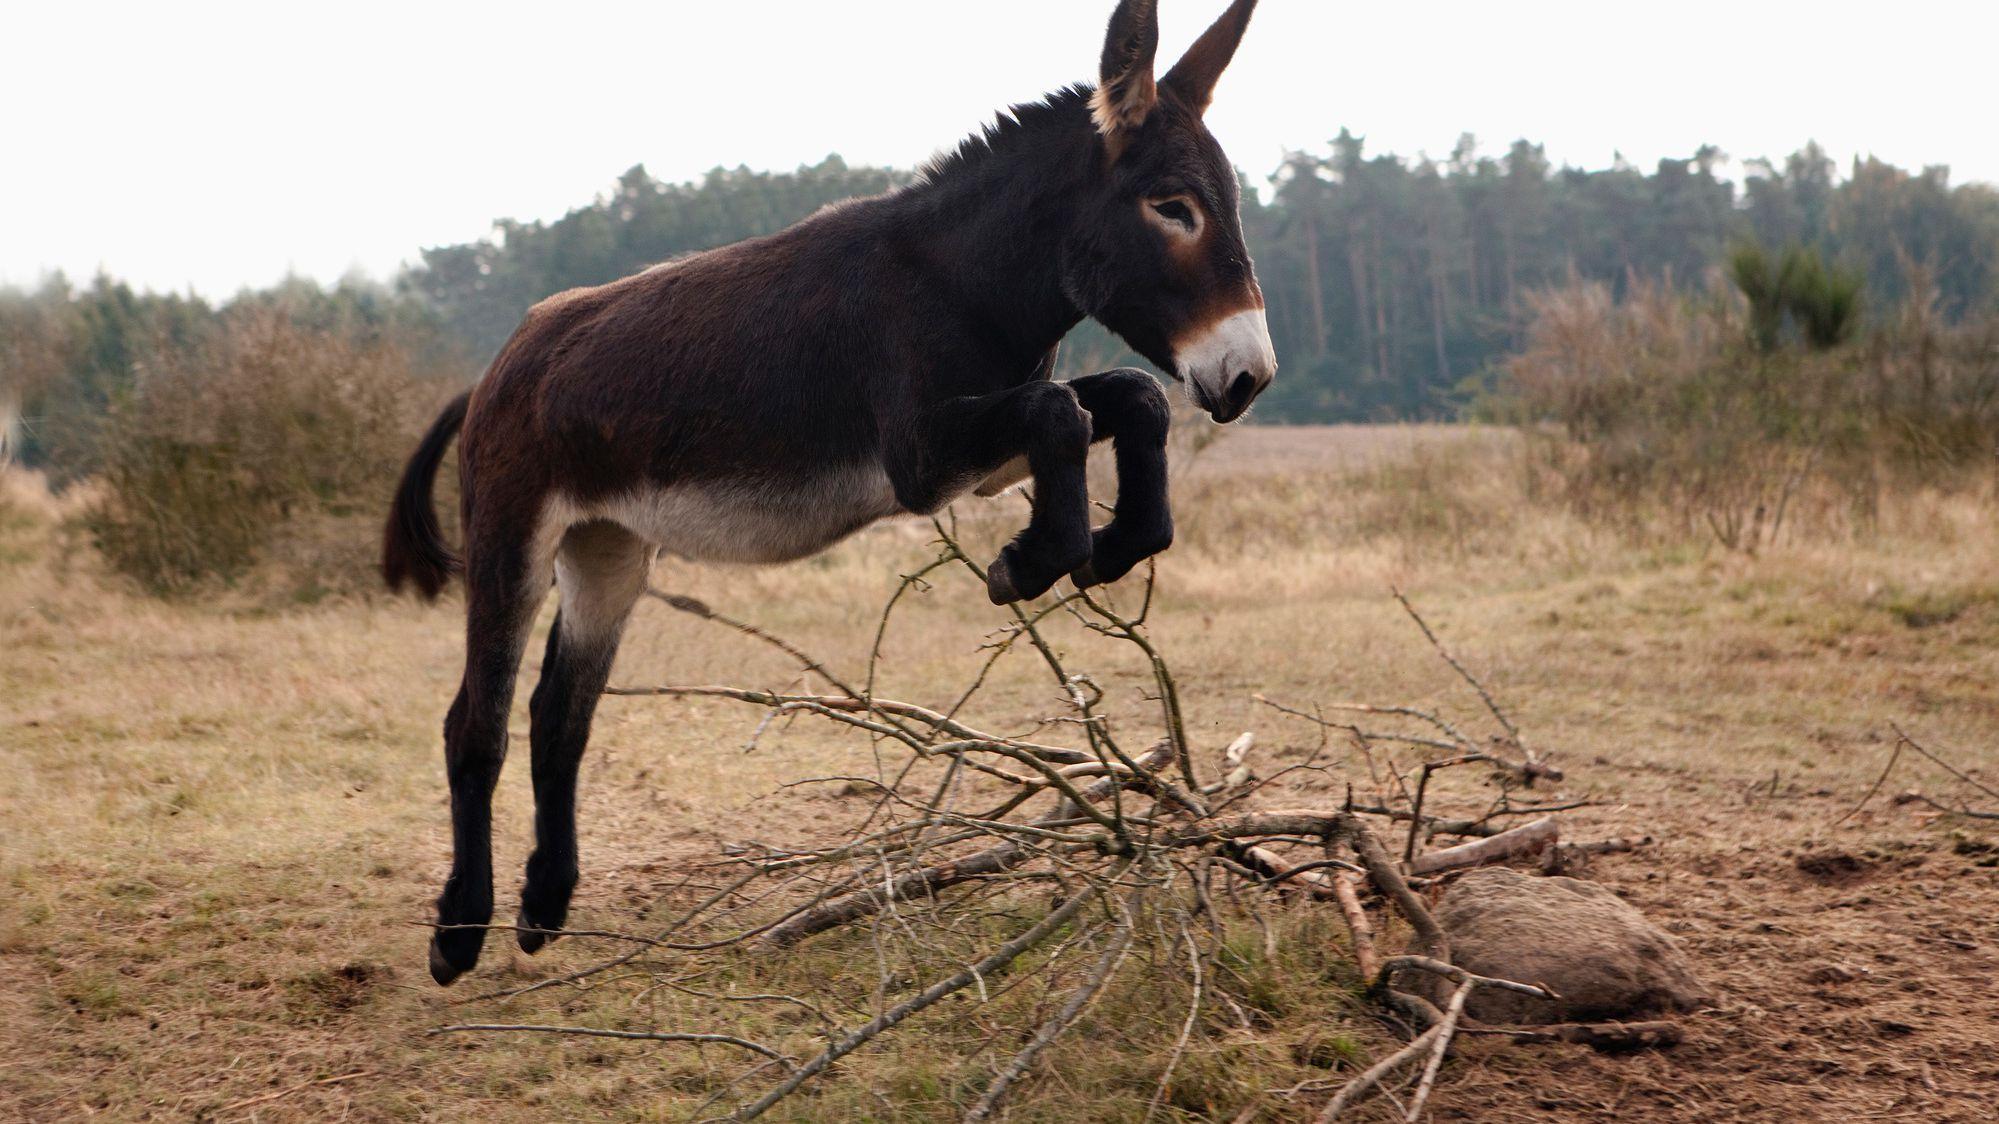 Donkey, the perfect symbol